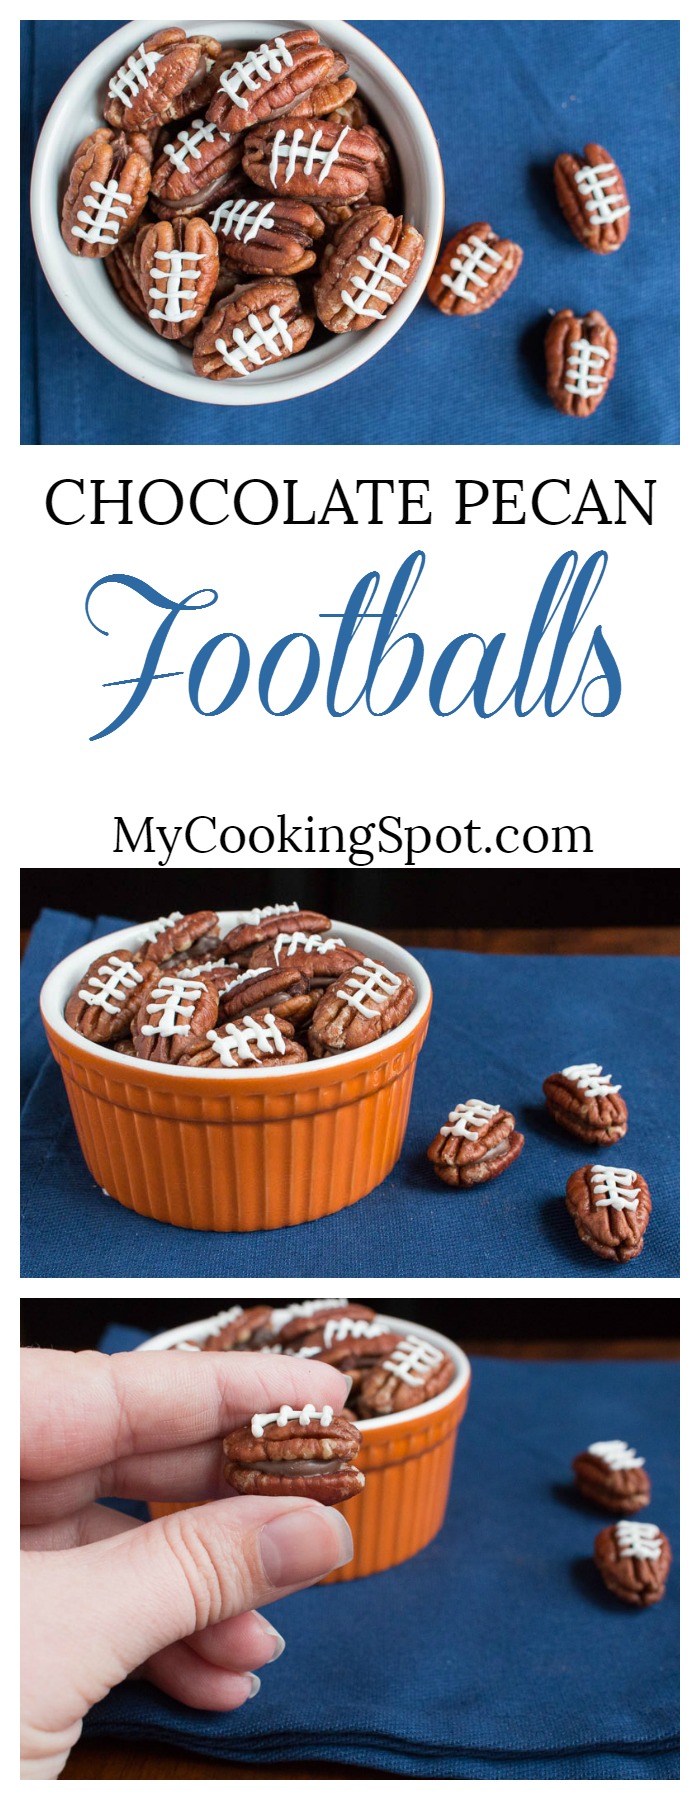 Pinterest - Chocolate Pecan Footballs